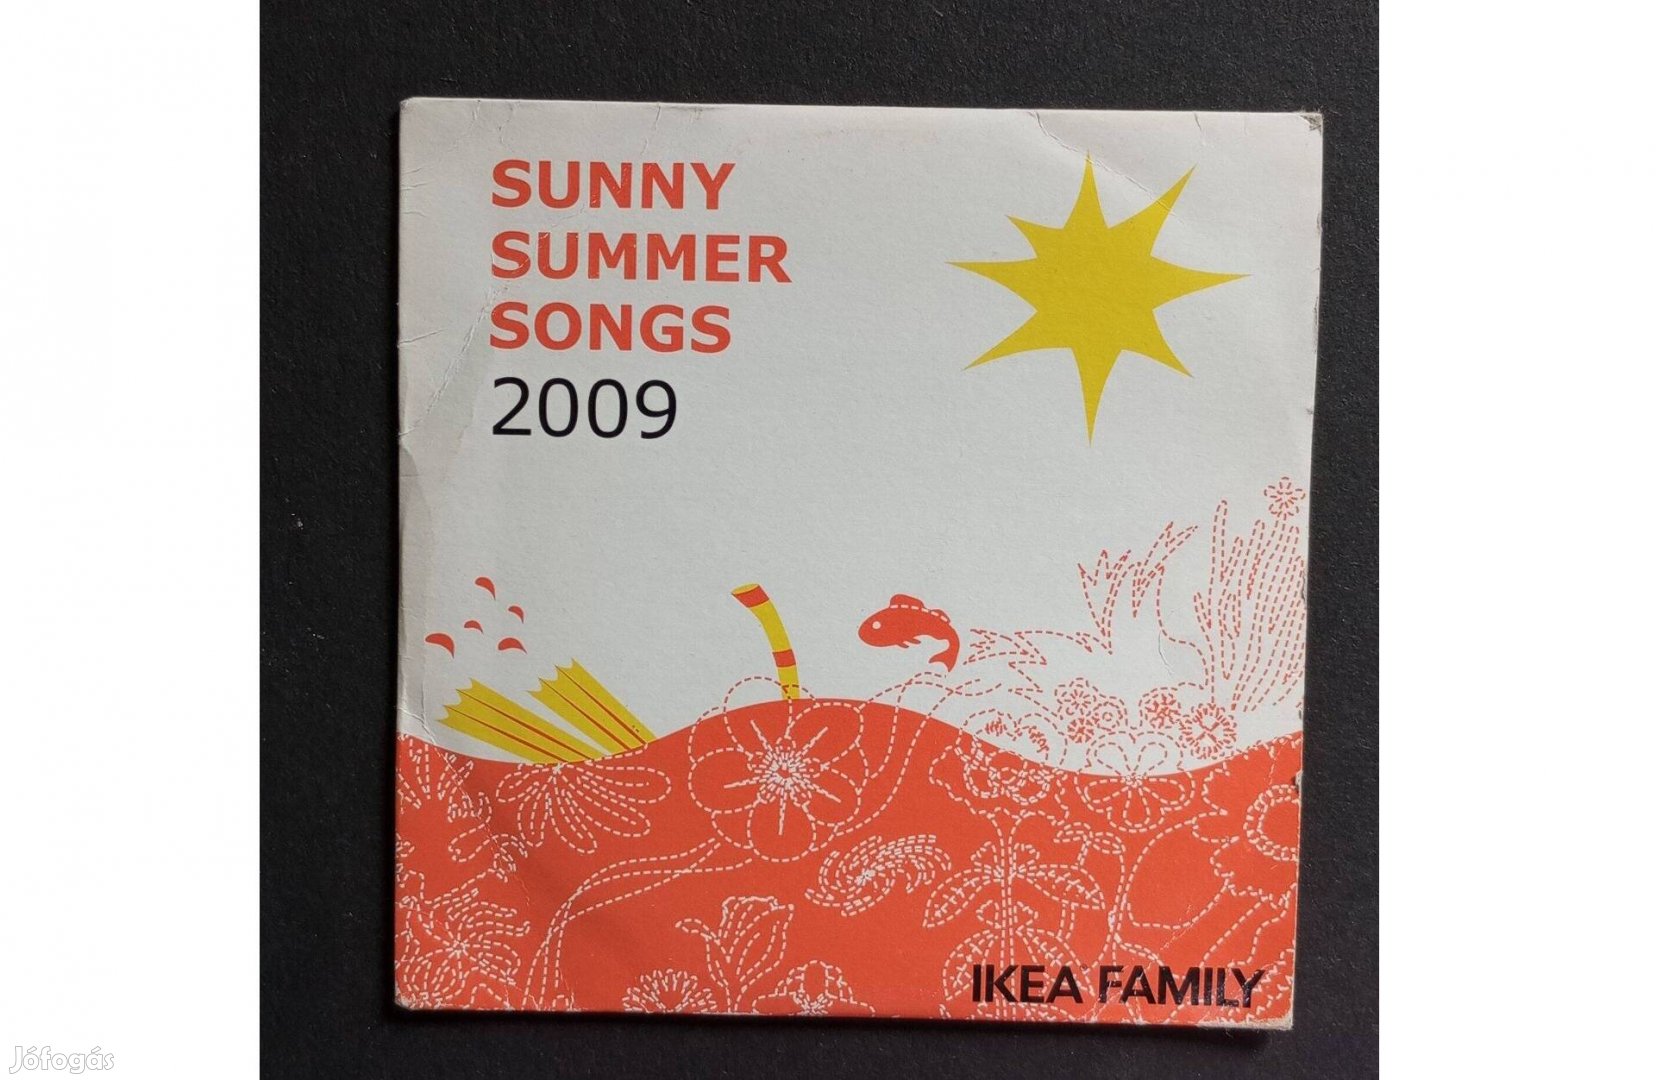 IKEA FAMILY 2009 ritka CD - Sunny Summer Songs előadók a fotón